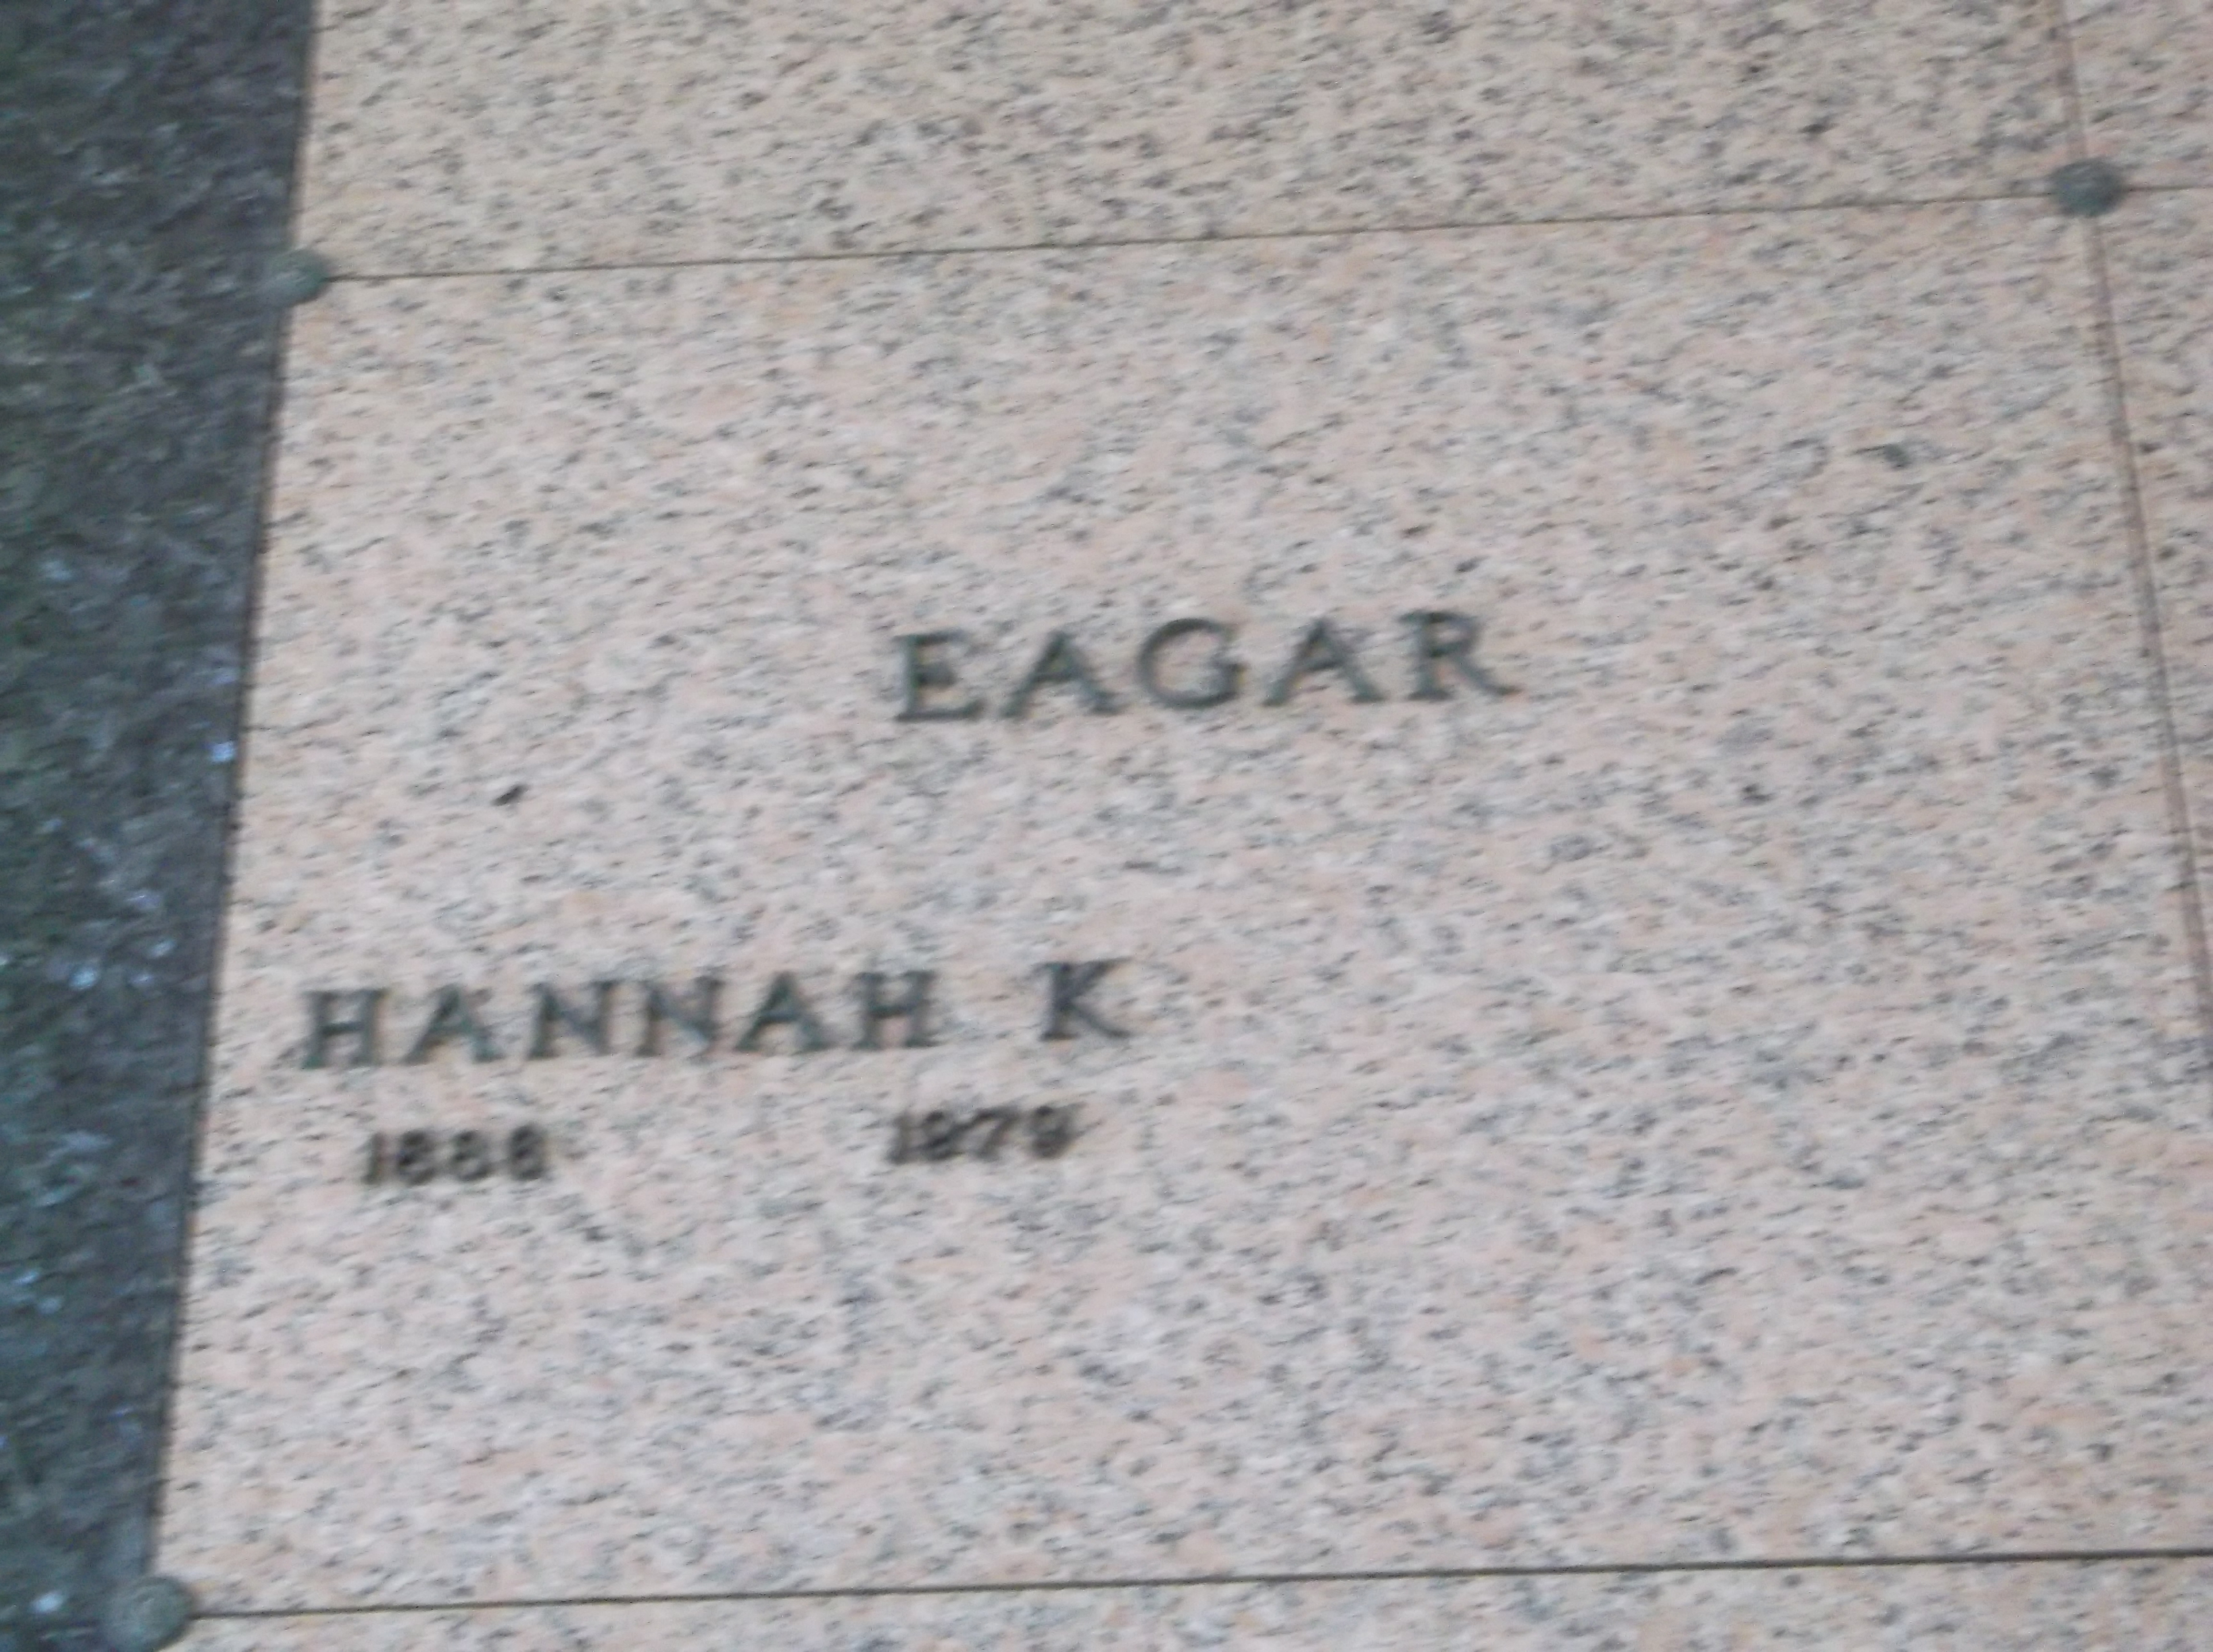 Hannah K Eagar